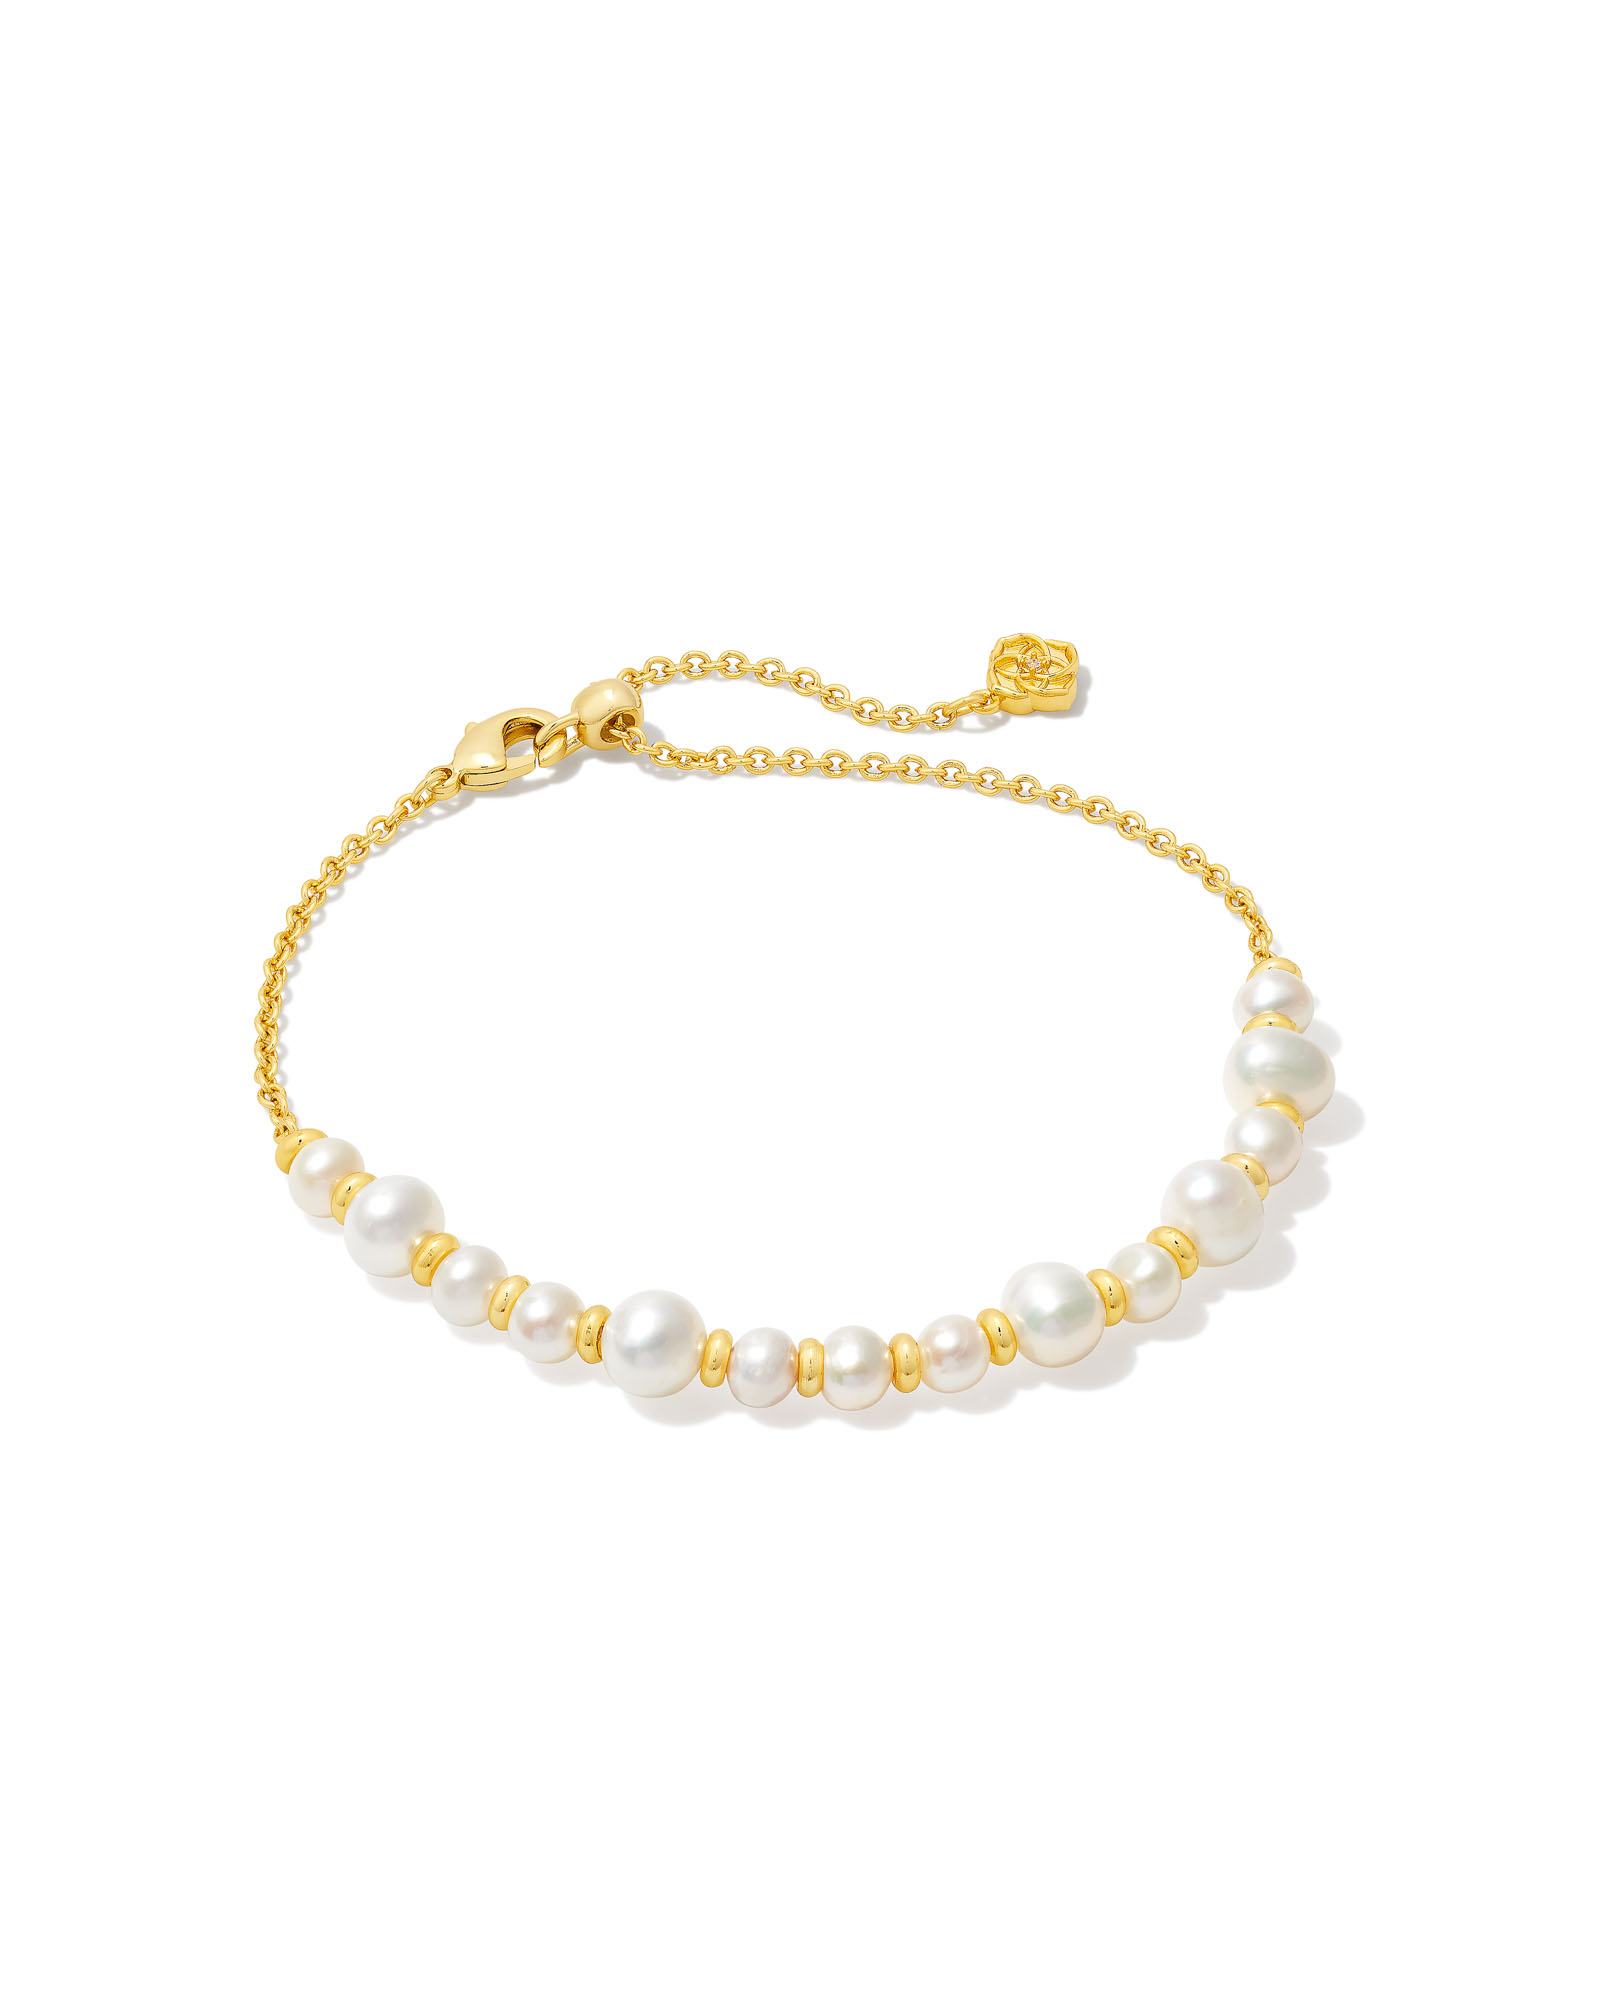 Keshi Pearl Bracelet in 18k Gold Vermeil on Sterling Silver and Pearl |  Jewellery by Monica Vinader